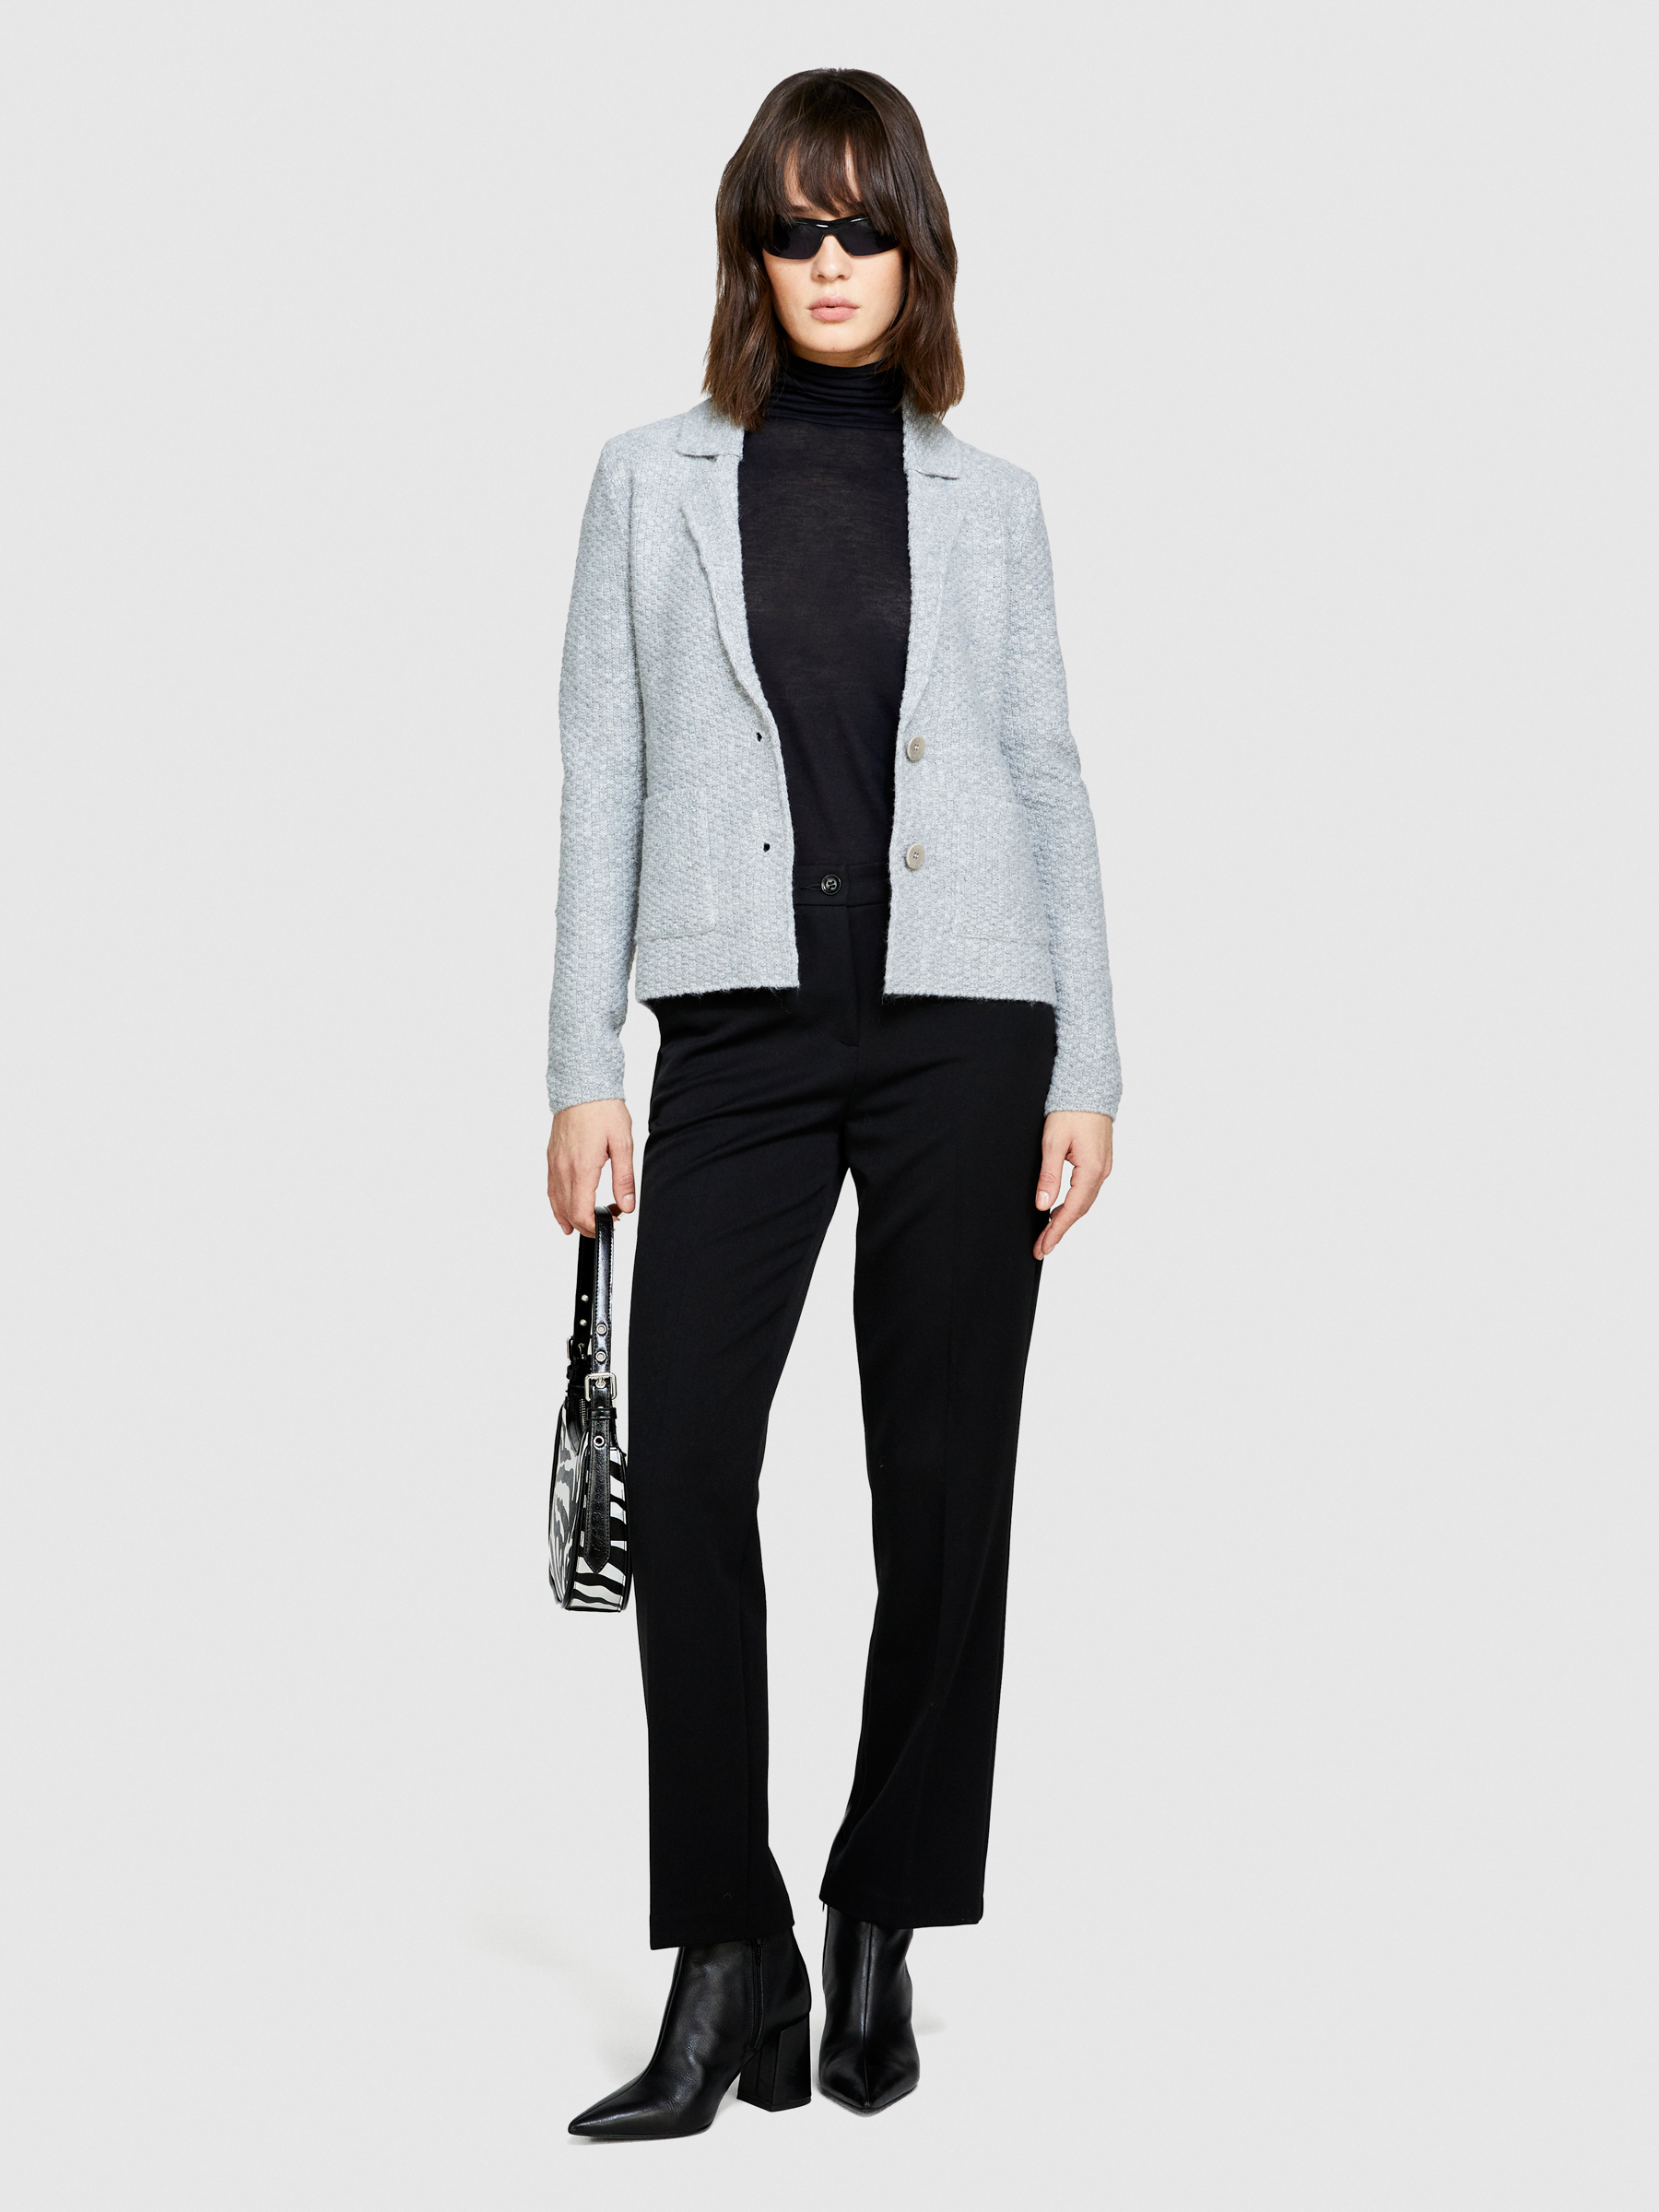 Sisley - Knit Blazer, Woman, Light Gray, Size: S